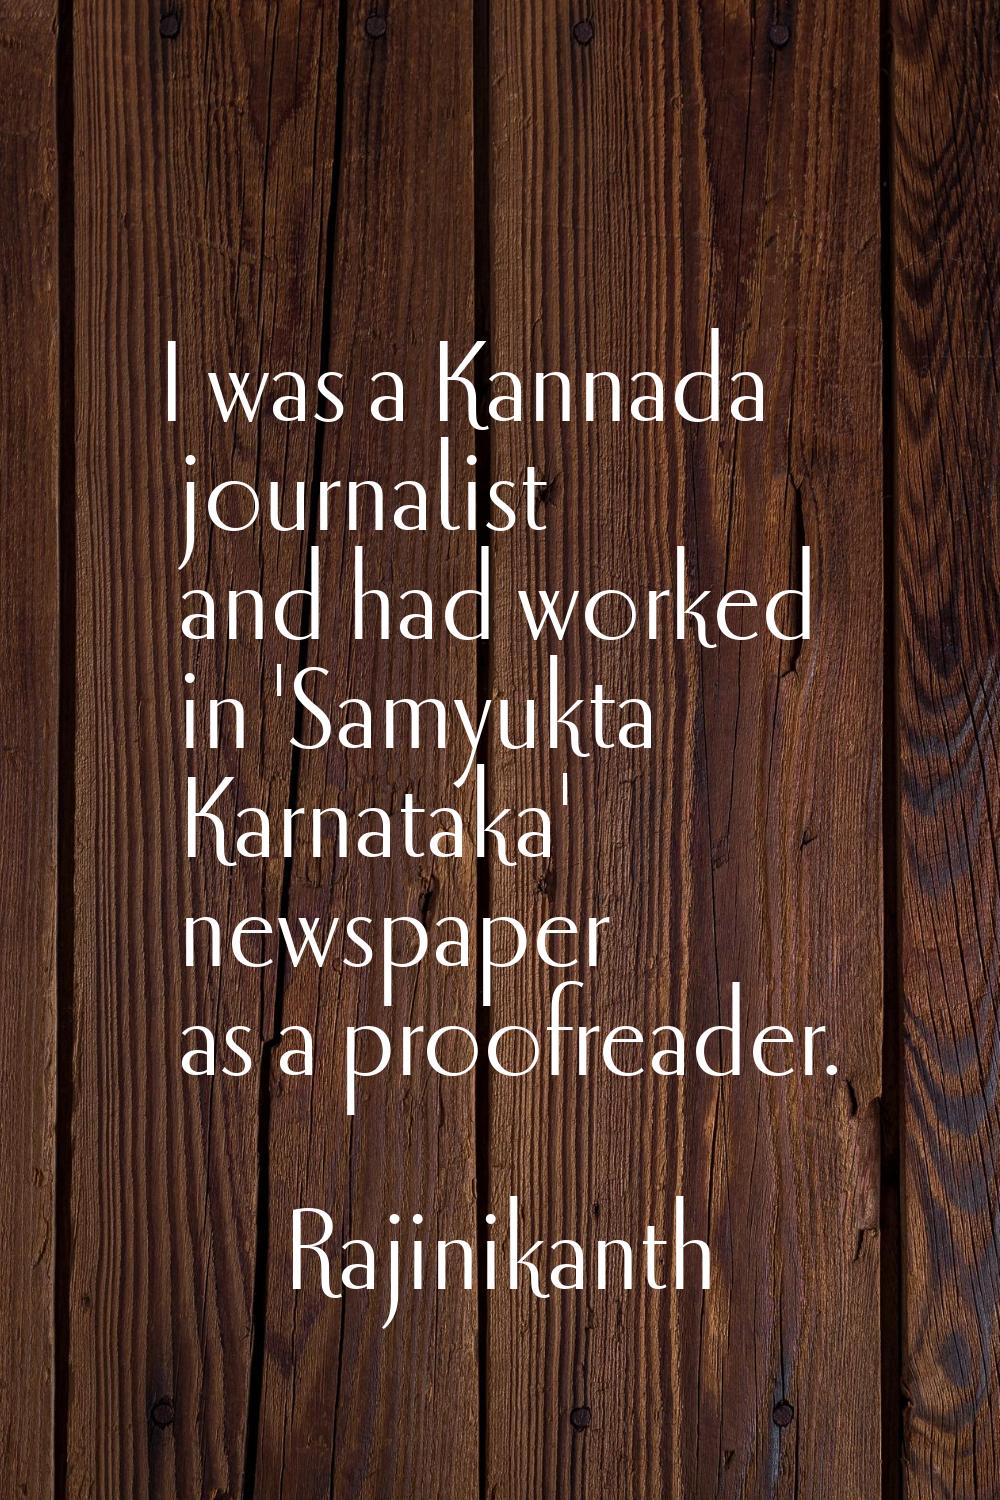 I was a Kannada journalist and had worked in 'Samyukta Karnataka' newspaper as a proofreader.